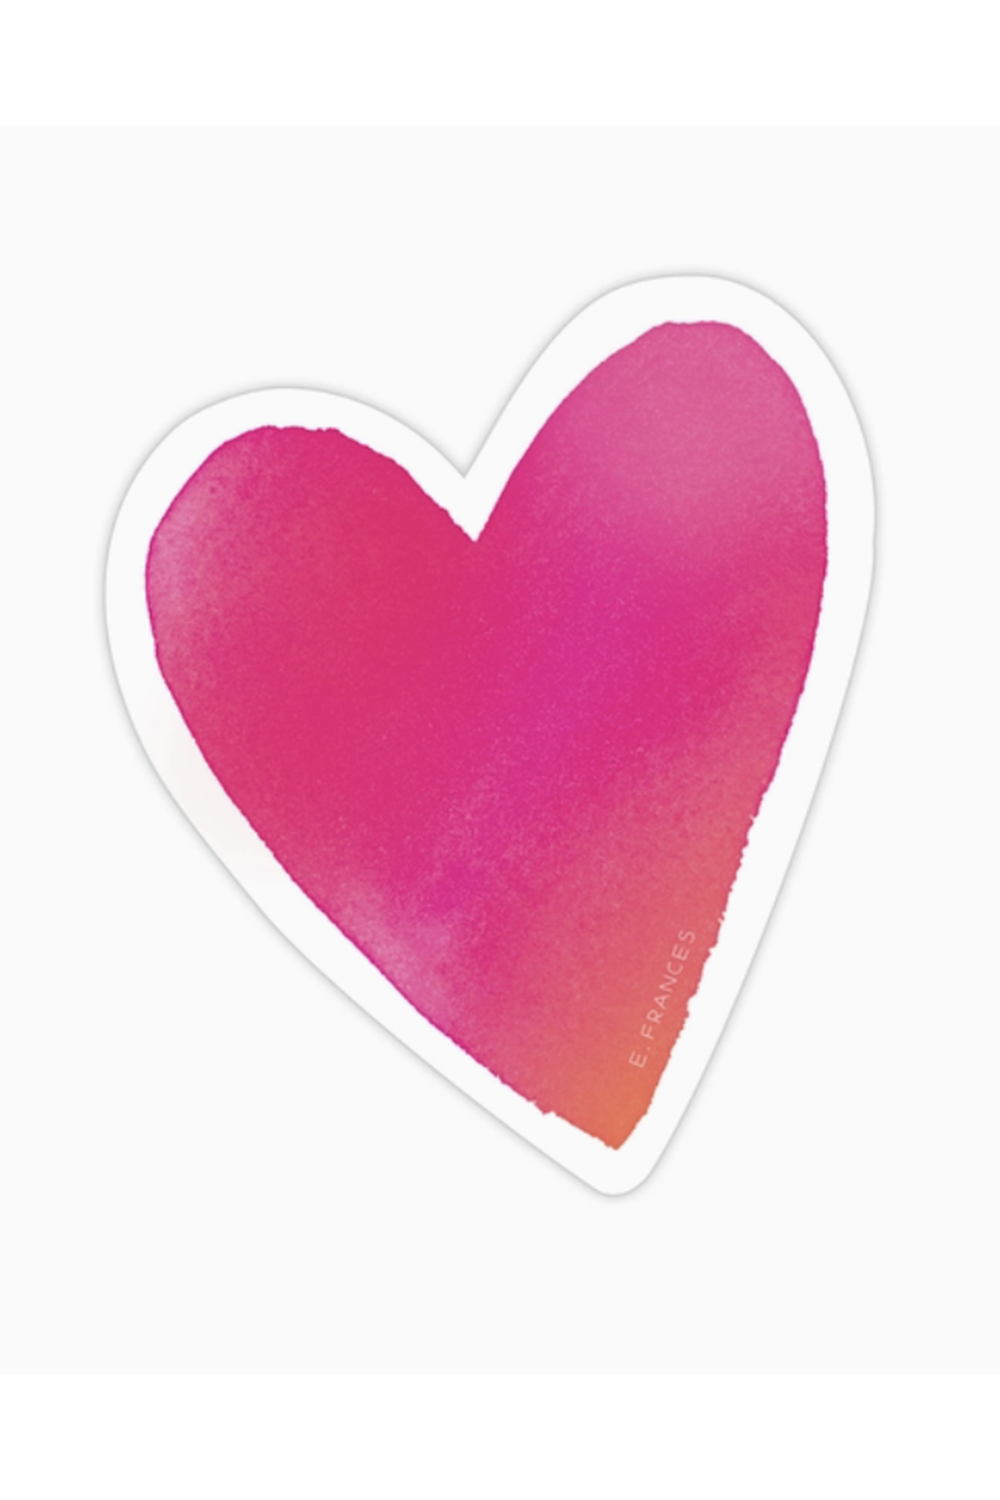 Trendy Sticker - Big Heart